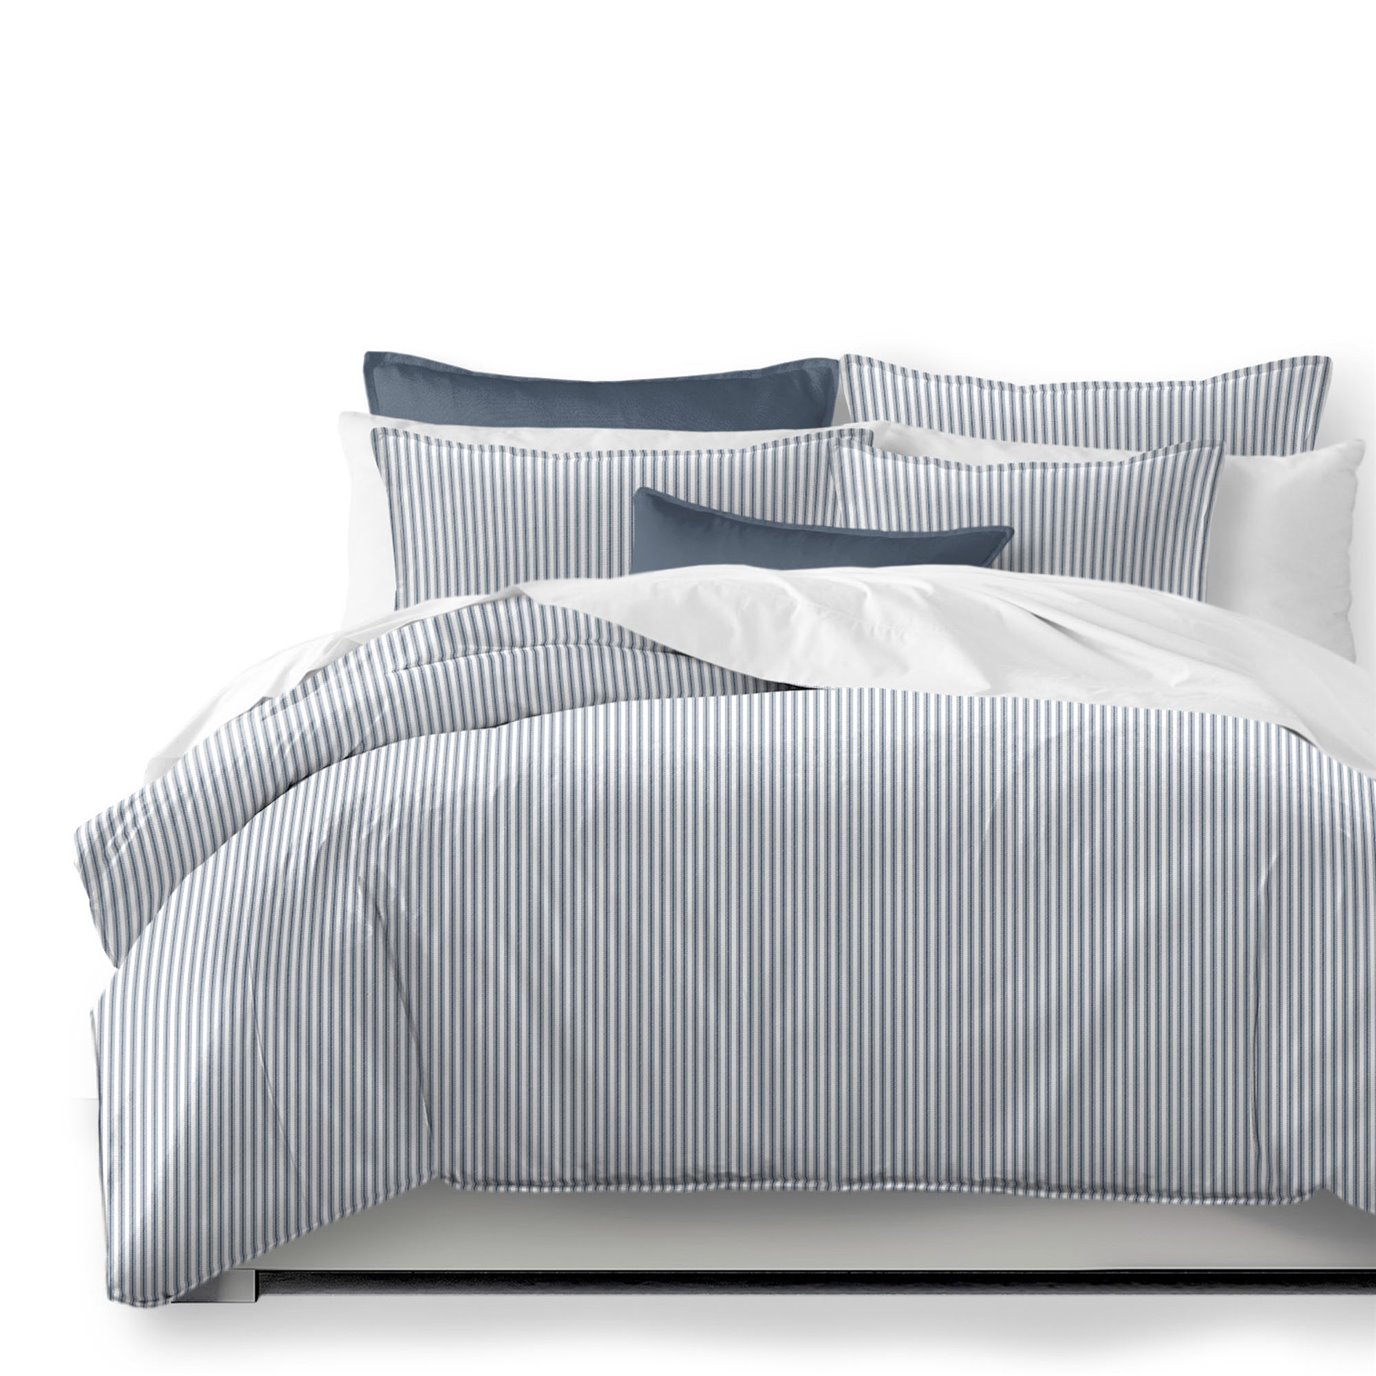 Cruz Ticking Stripes White/Navy Coverlet and Pillow Sham(s) Set - Size Twin